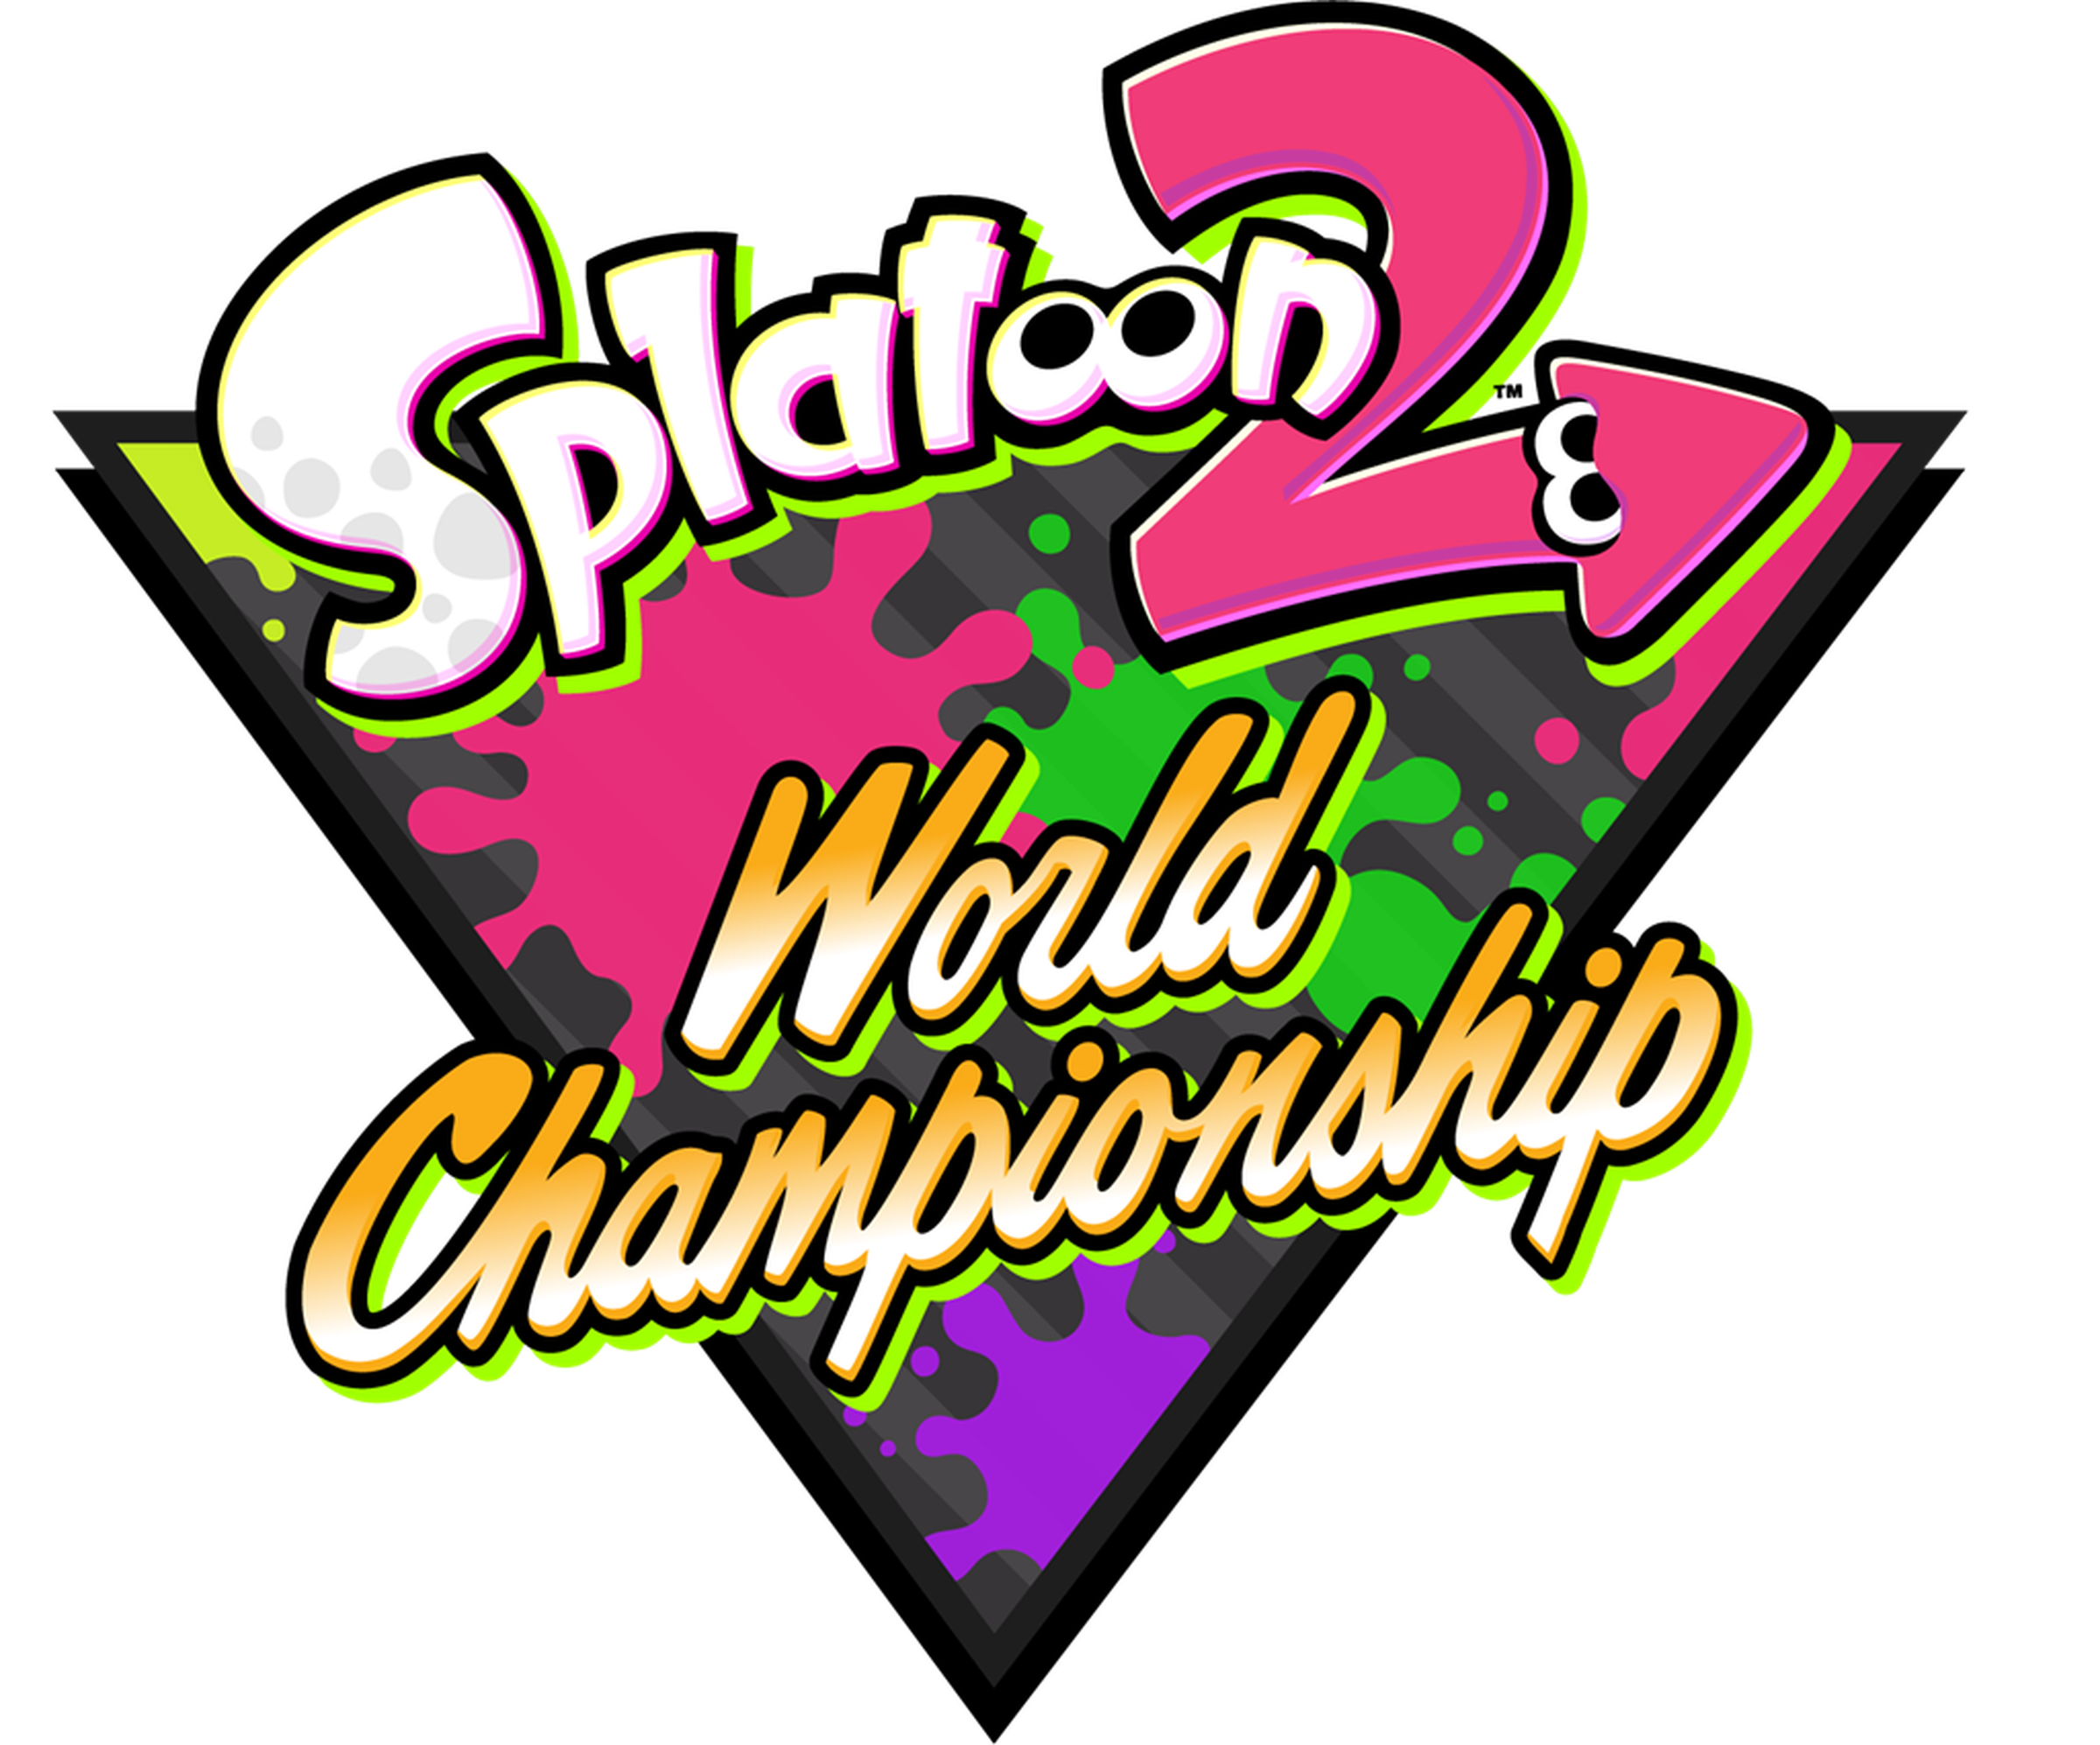 Splatoon World Championship